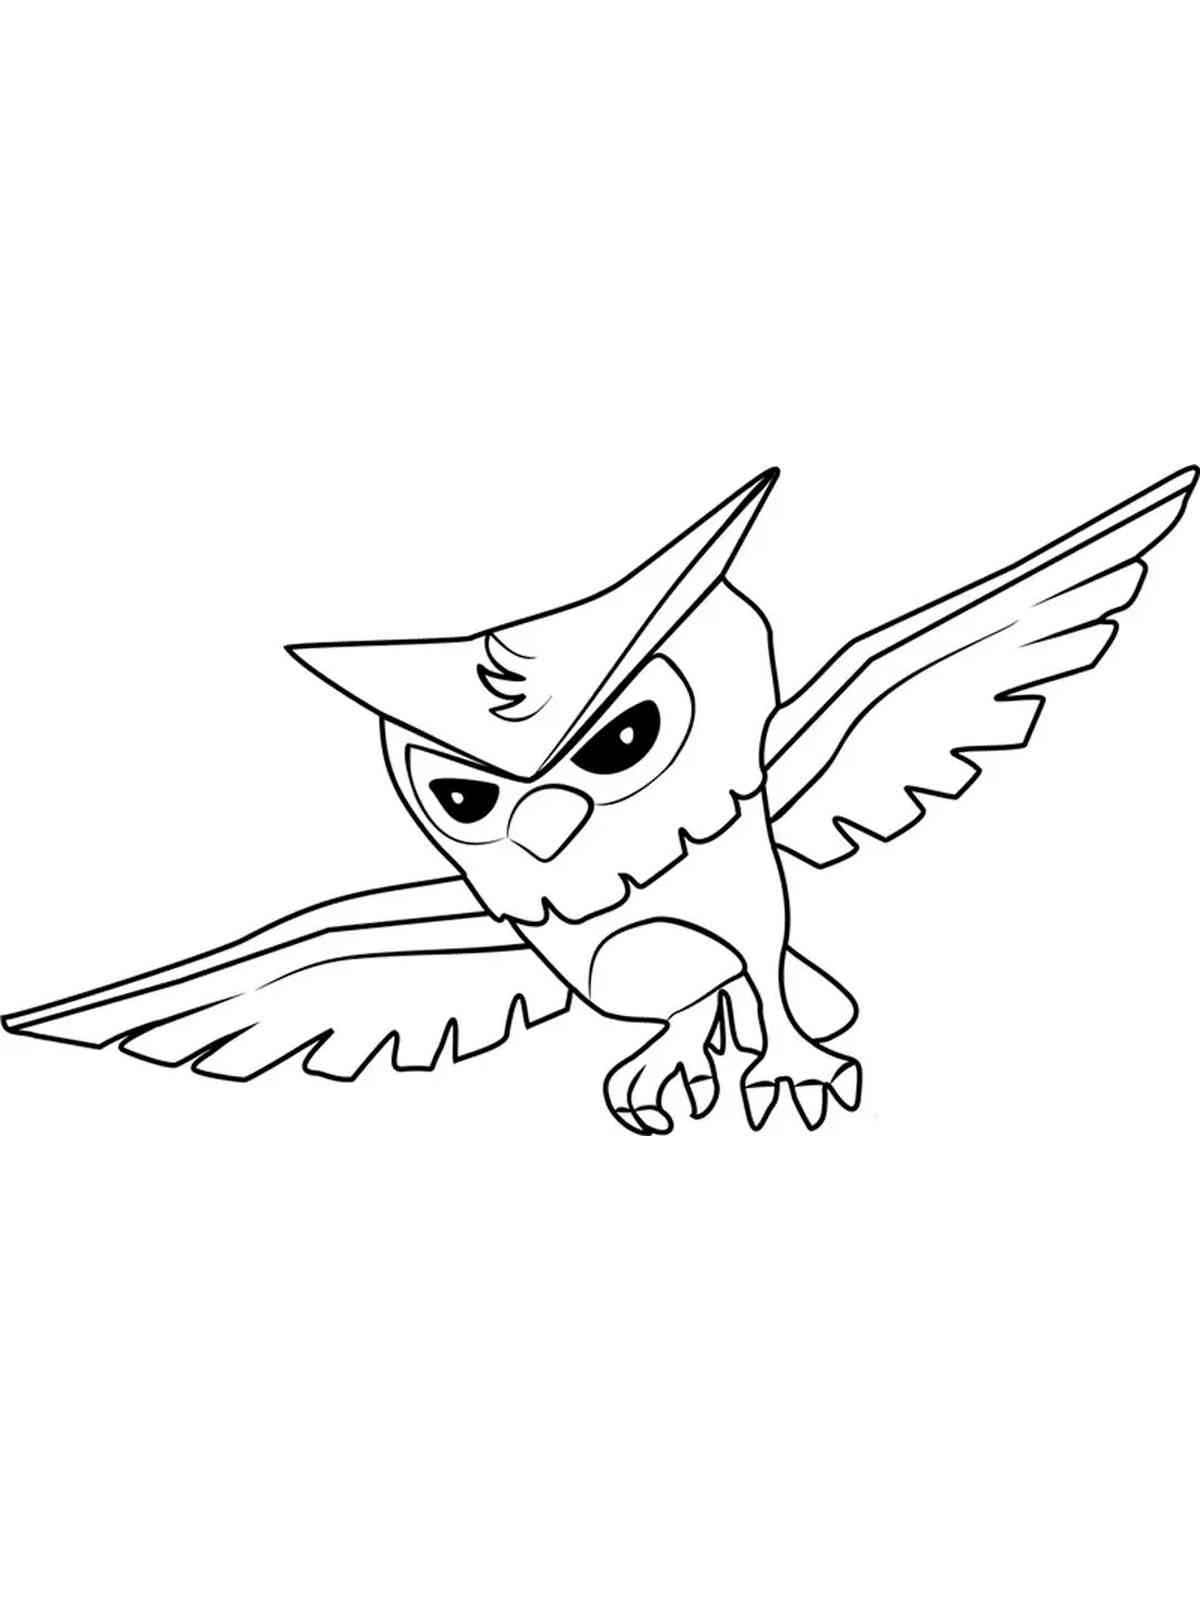 Owl Animal Jam coloring page